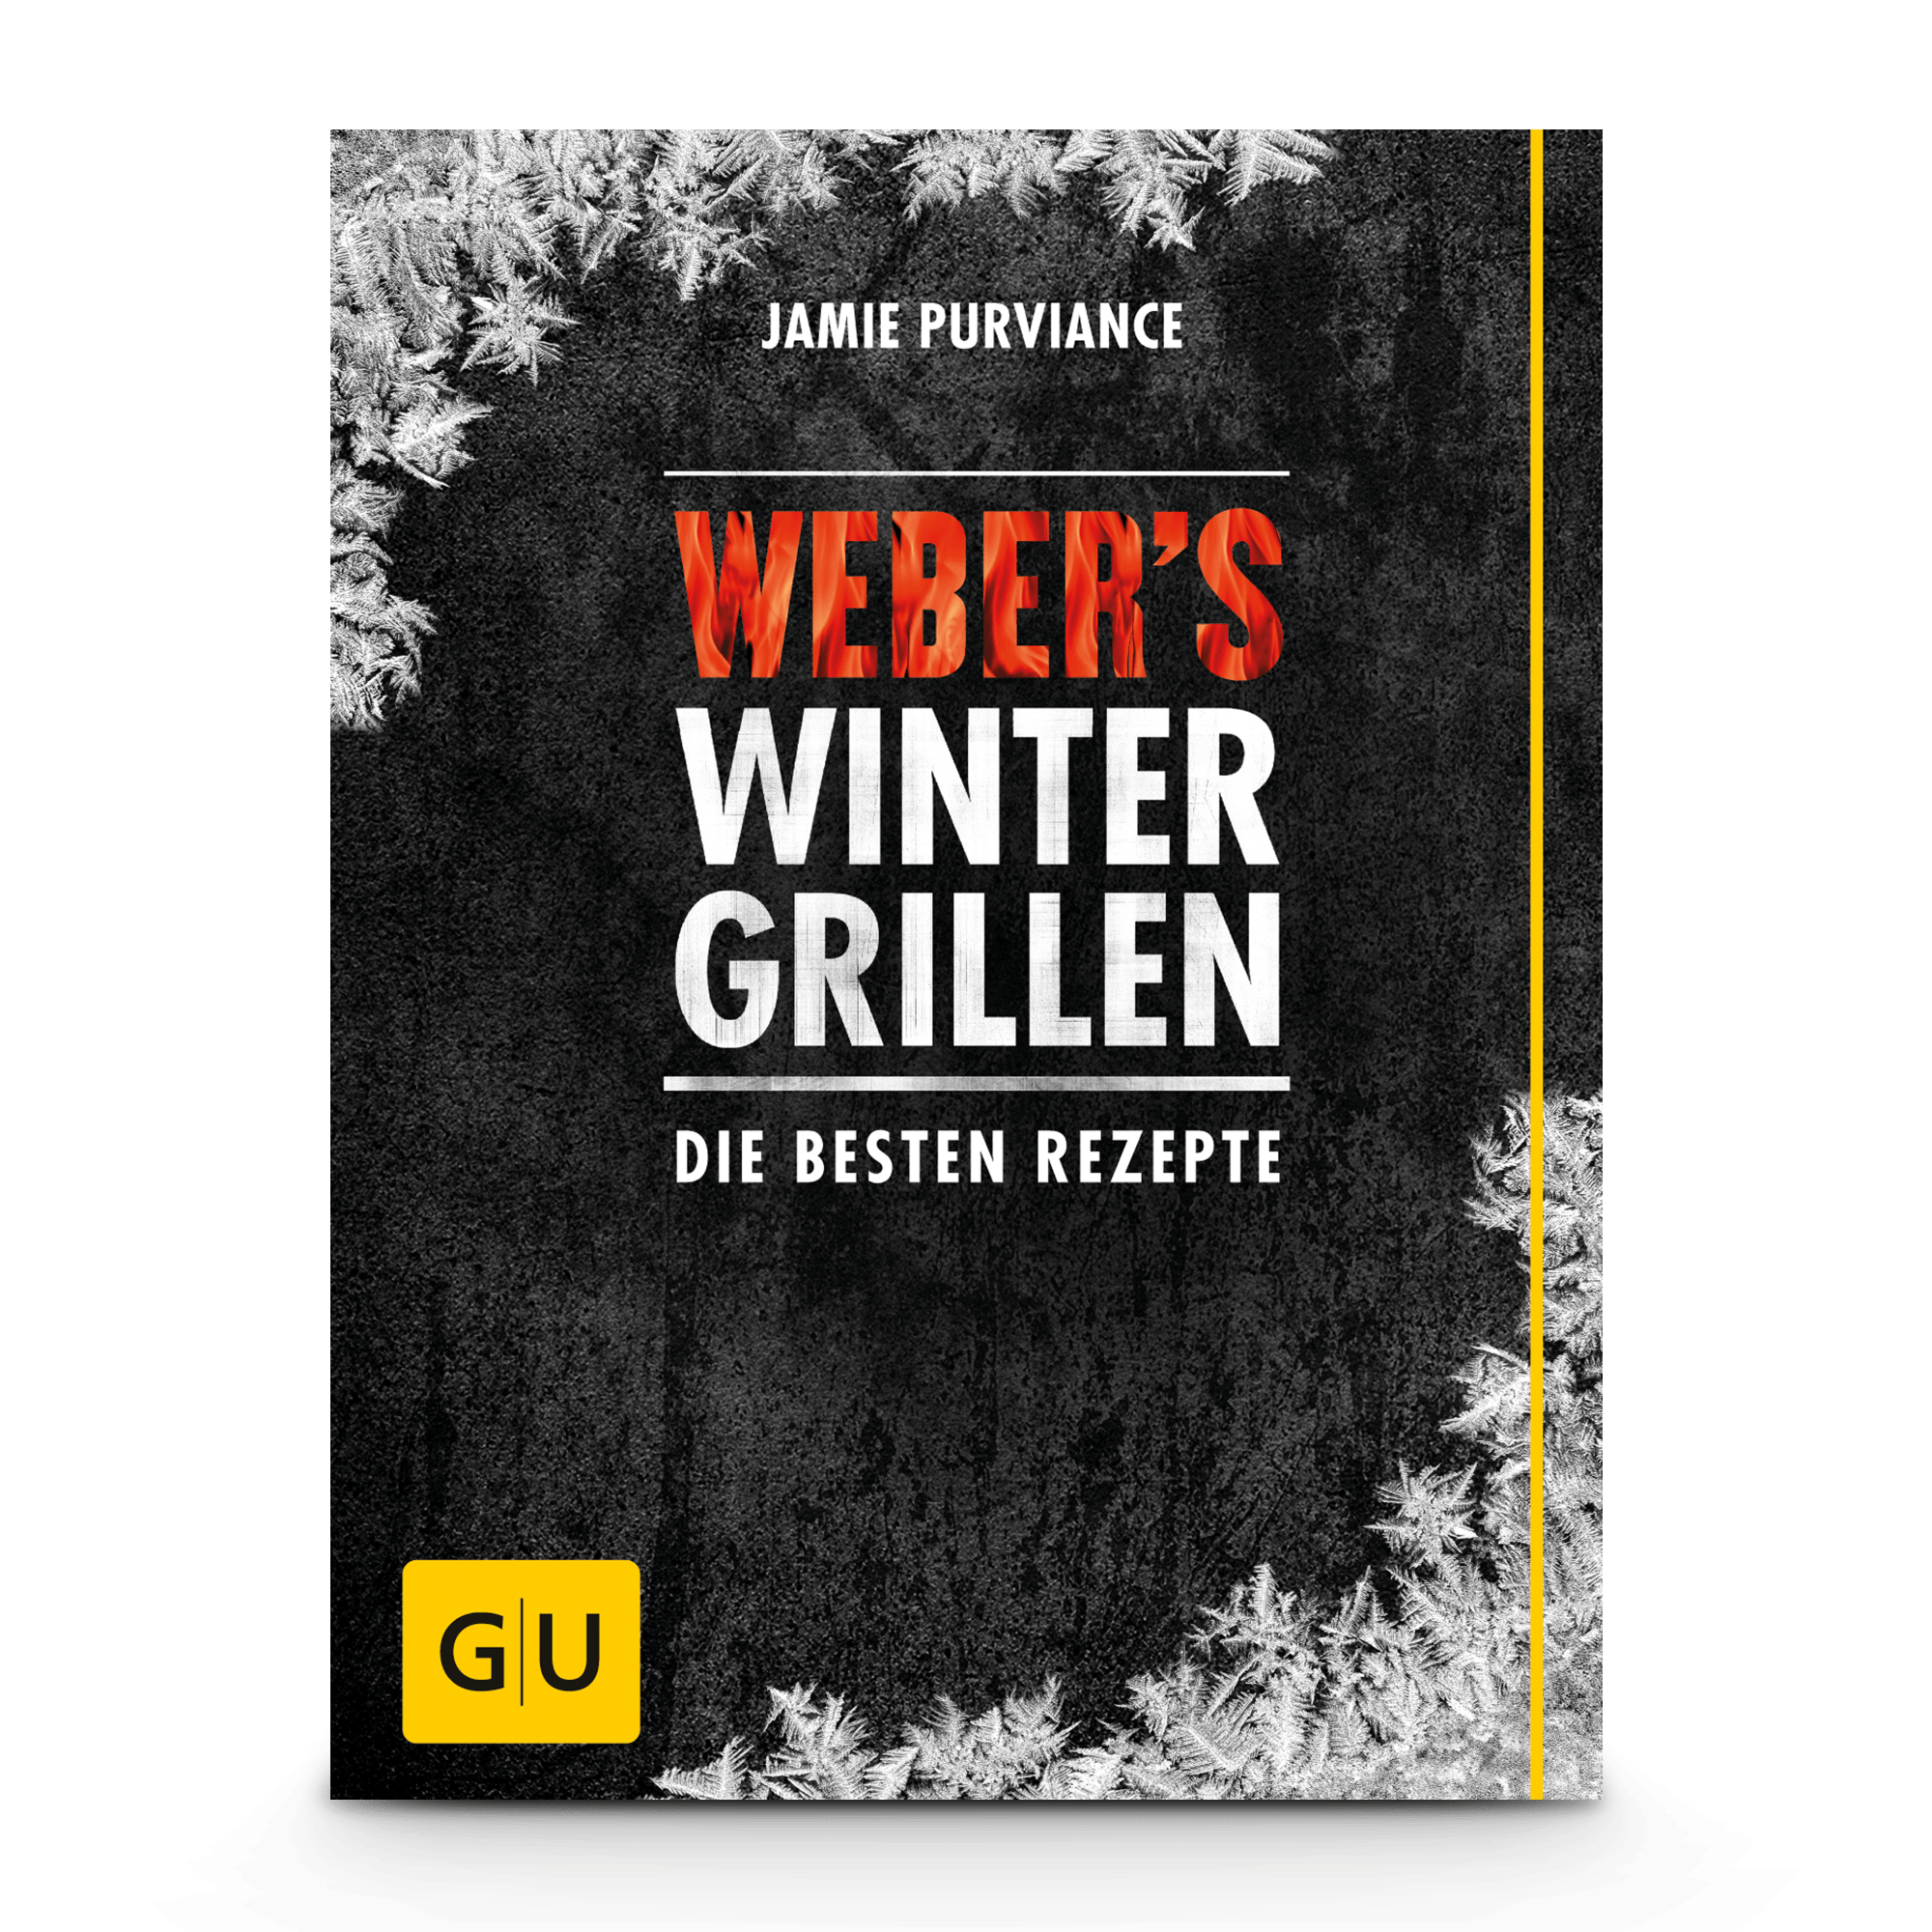 Weber’s Wintergrillen